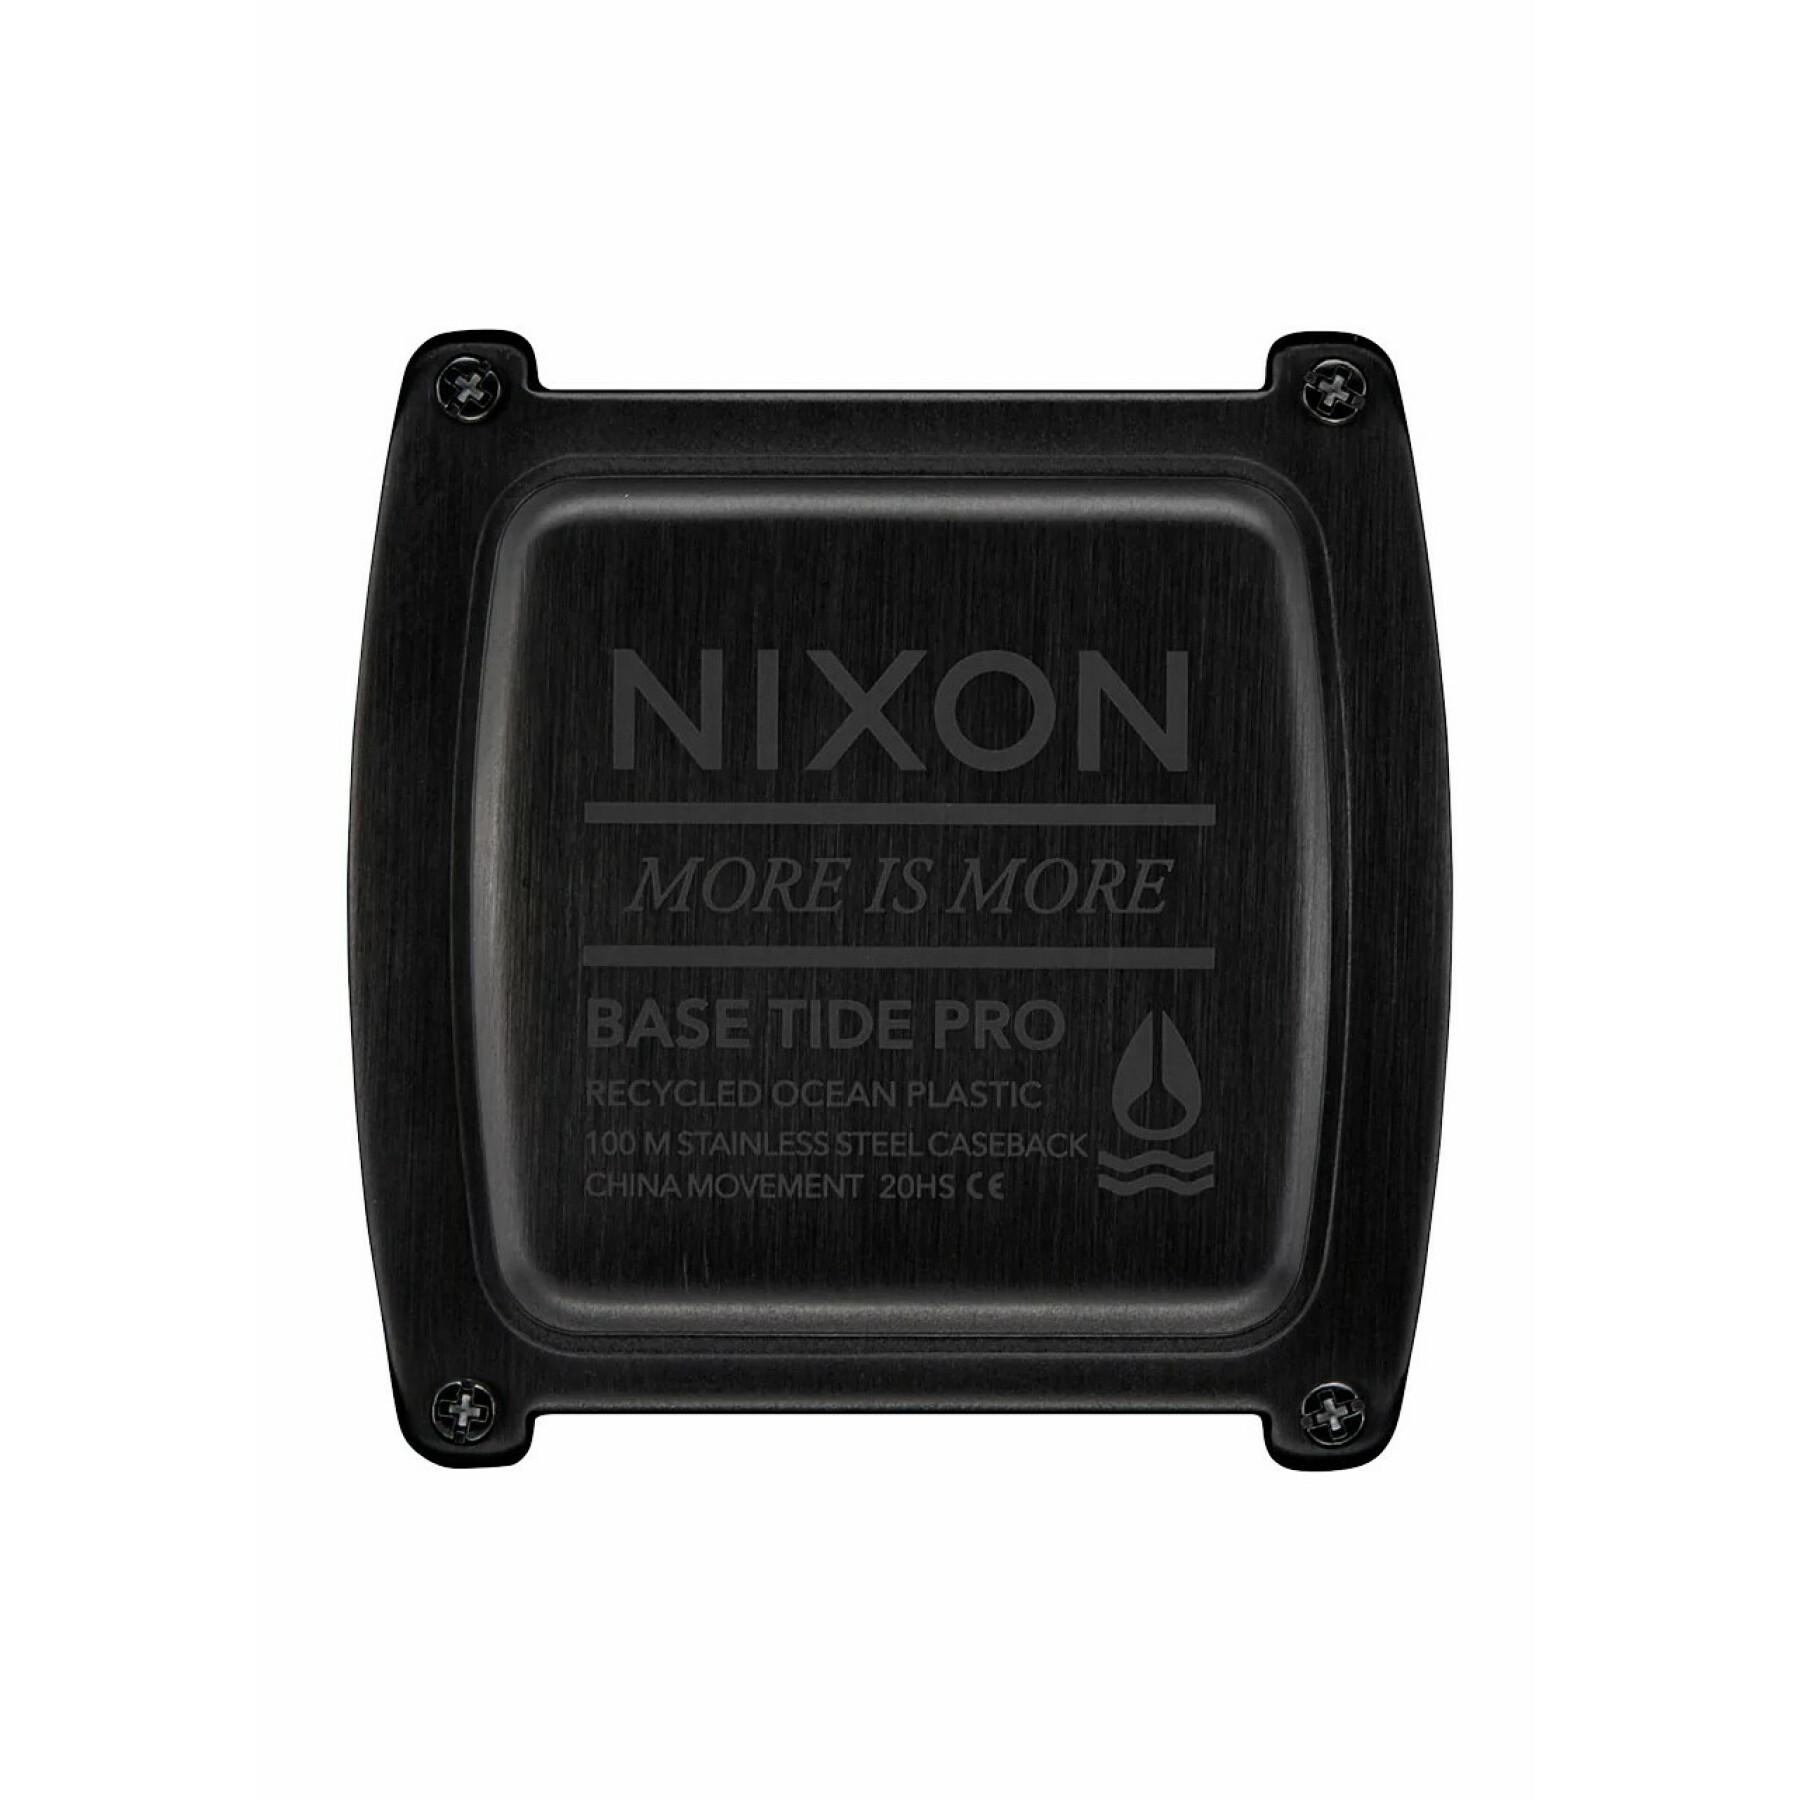 Watch Nixon Base Tide Pro